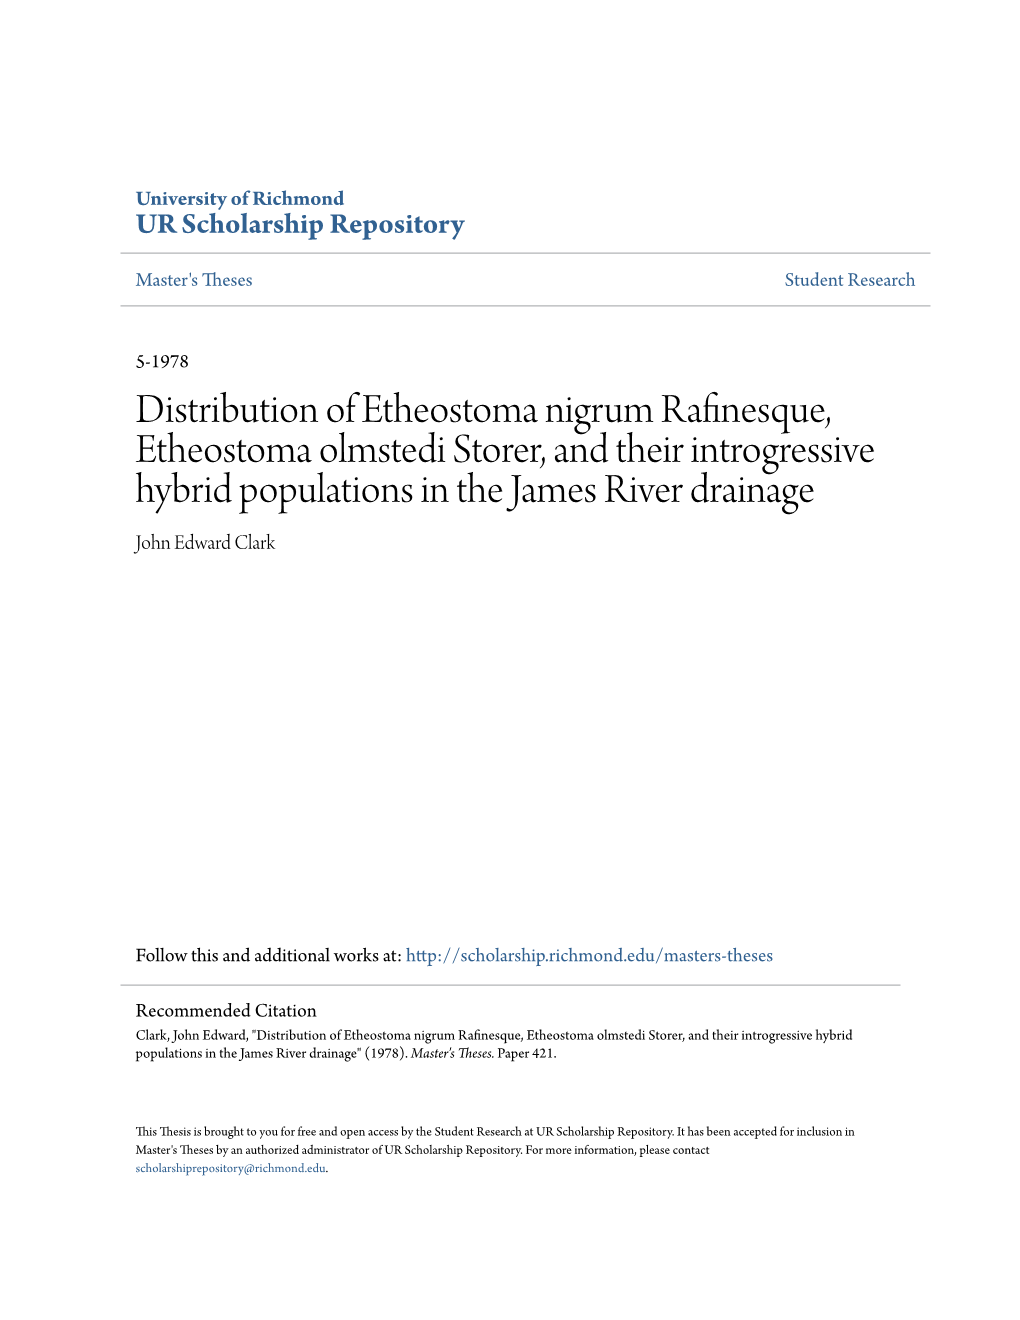 Distribution of Etheostoma Nigrum Rafinesque, Etheostoma Olmstedi Storer, and Their Introgressive Hybrid Populations in the James River Drainage John Edward Clark